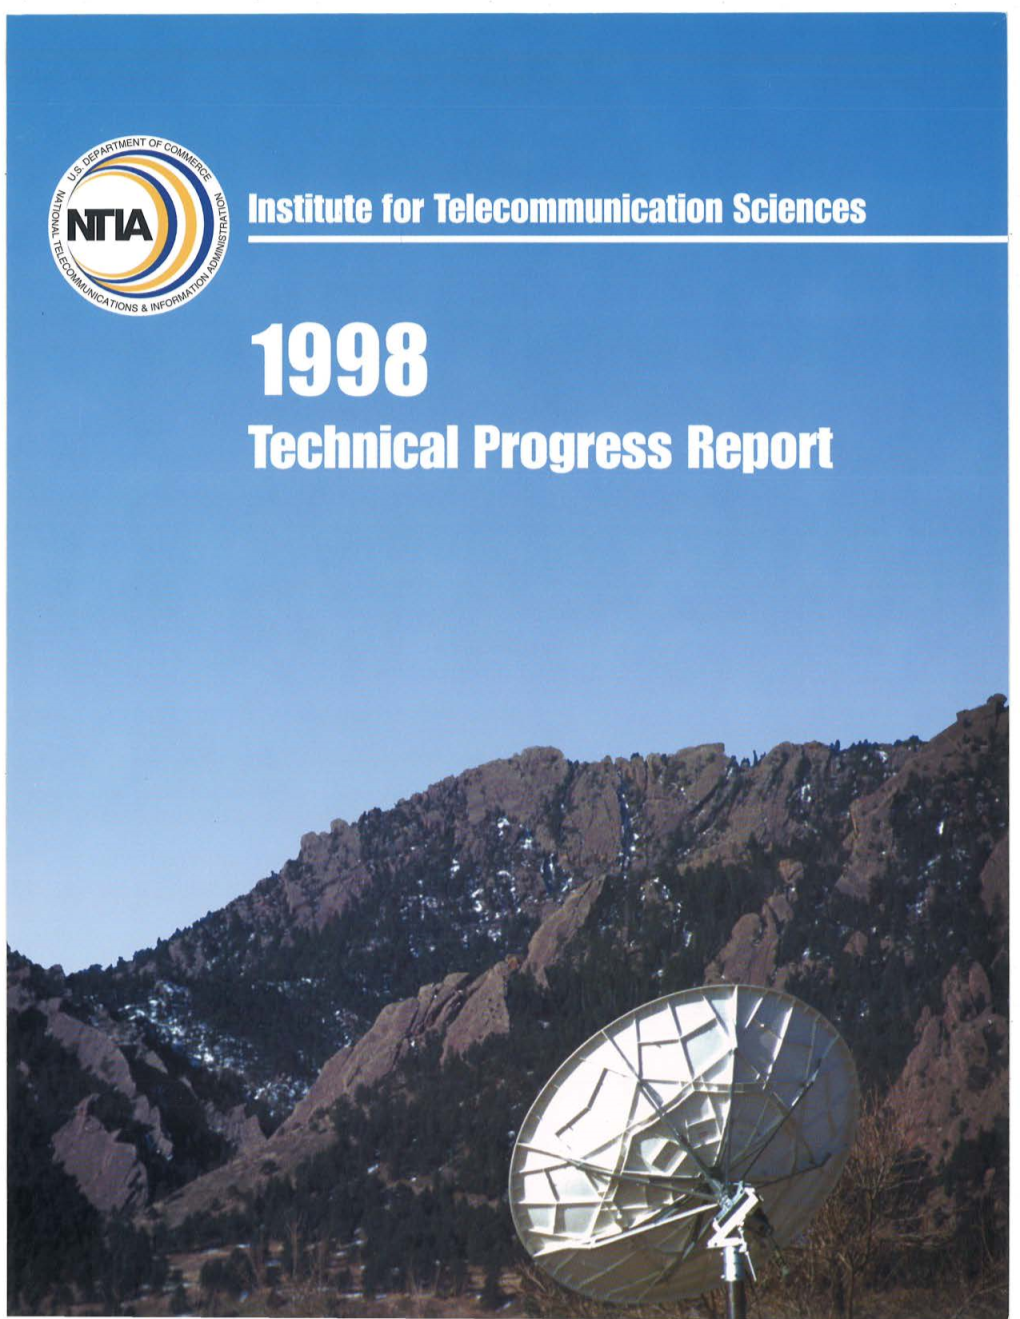 FY 1998 Technical Progress Report